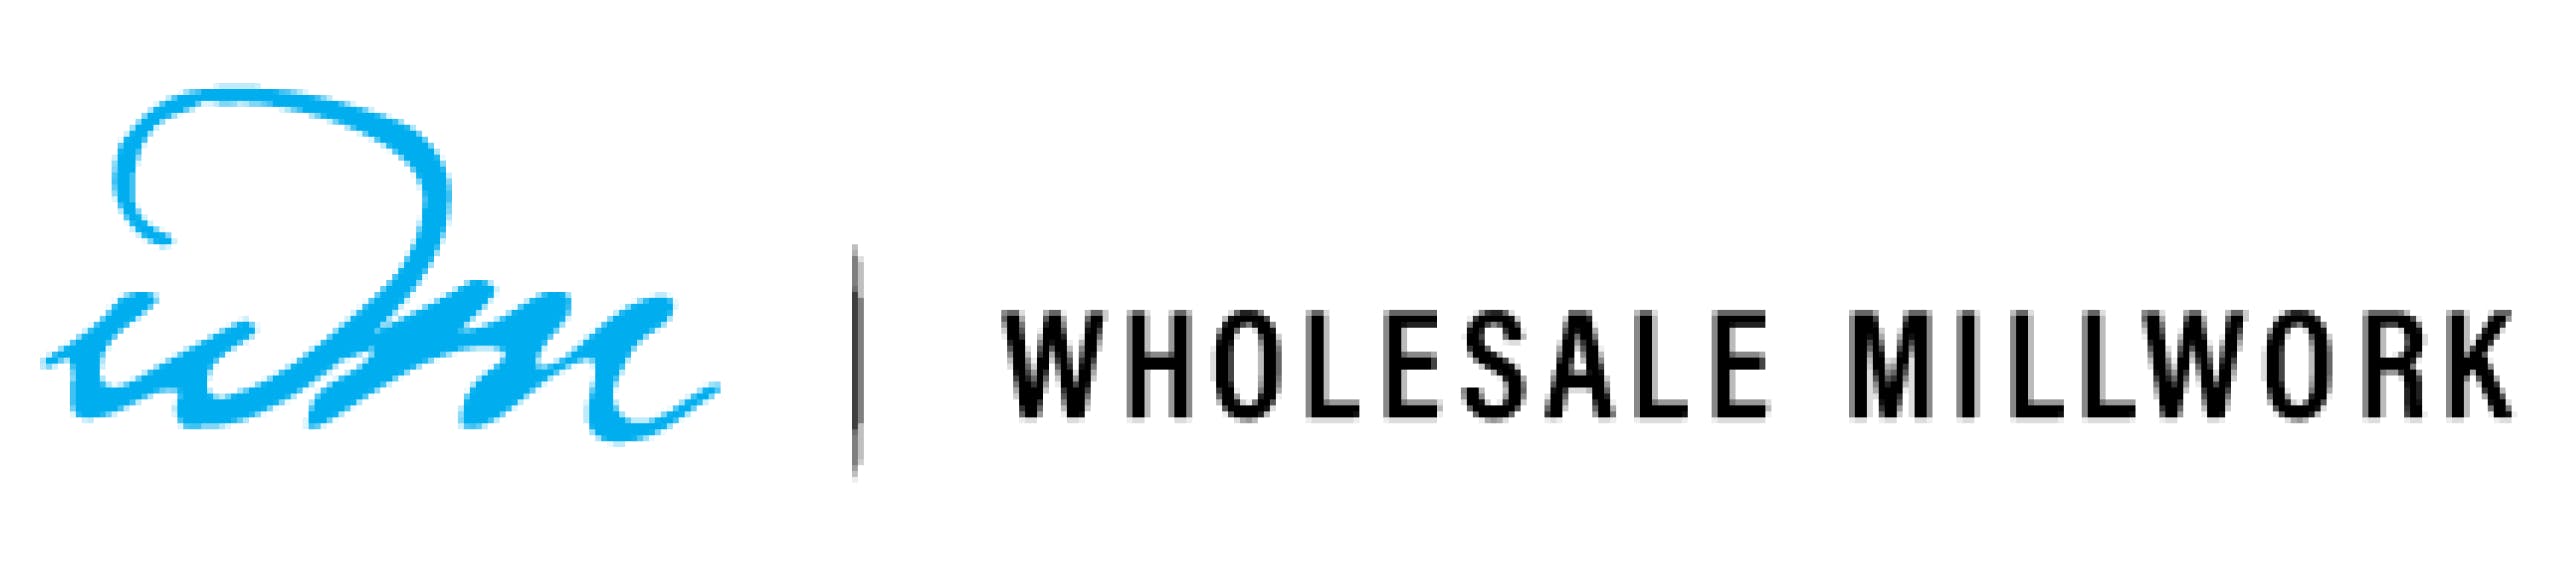 Wholesale Millwork Logo